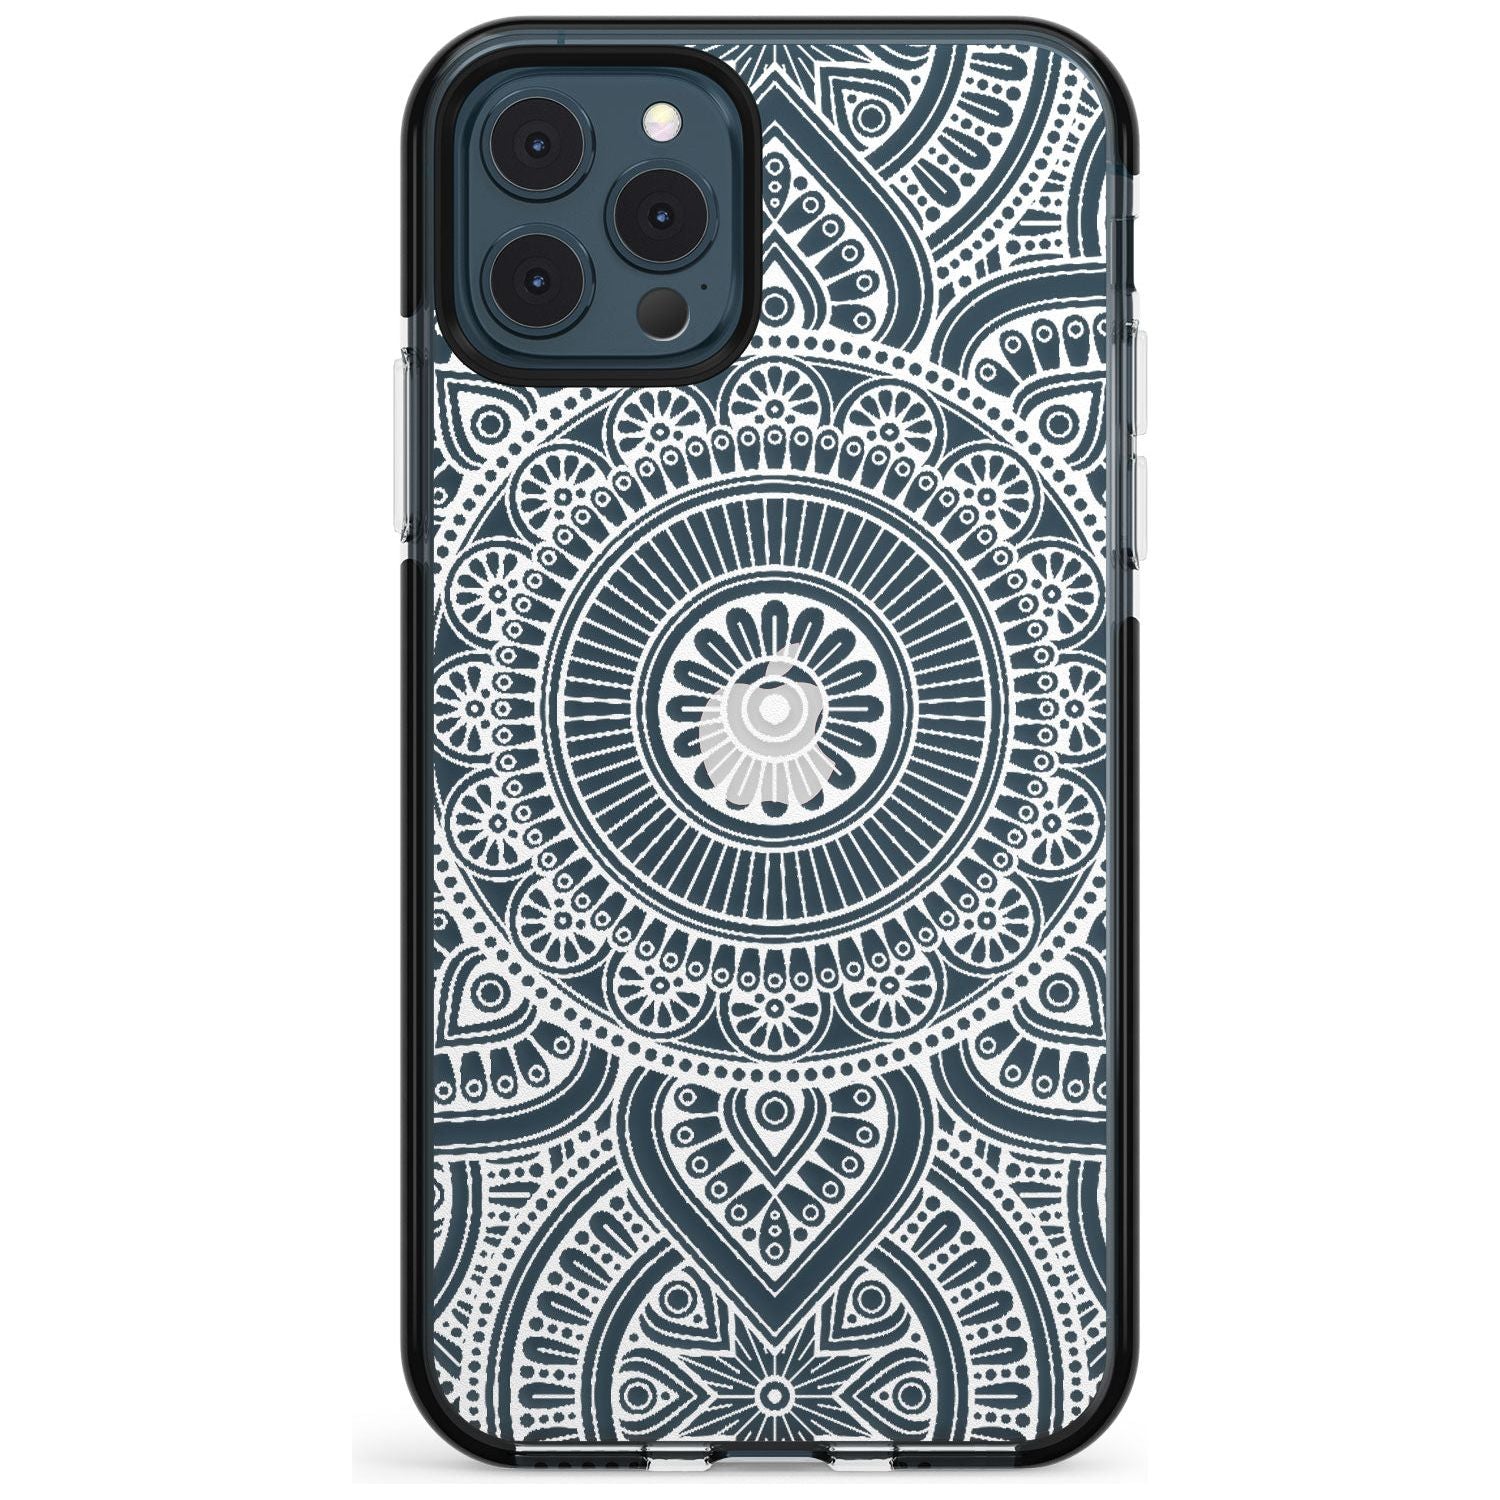 White Henna Flower Wheel Black Impact Phone Case for iPhone 11